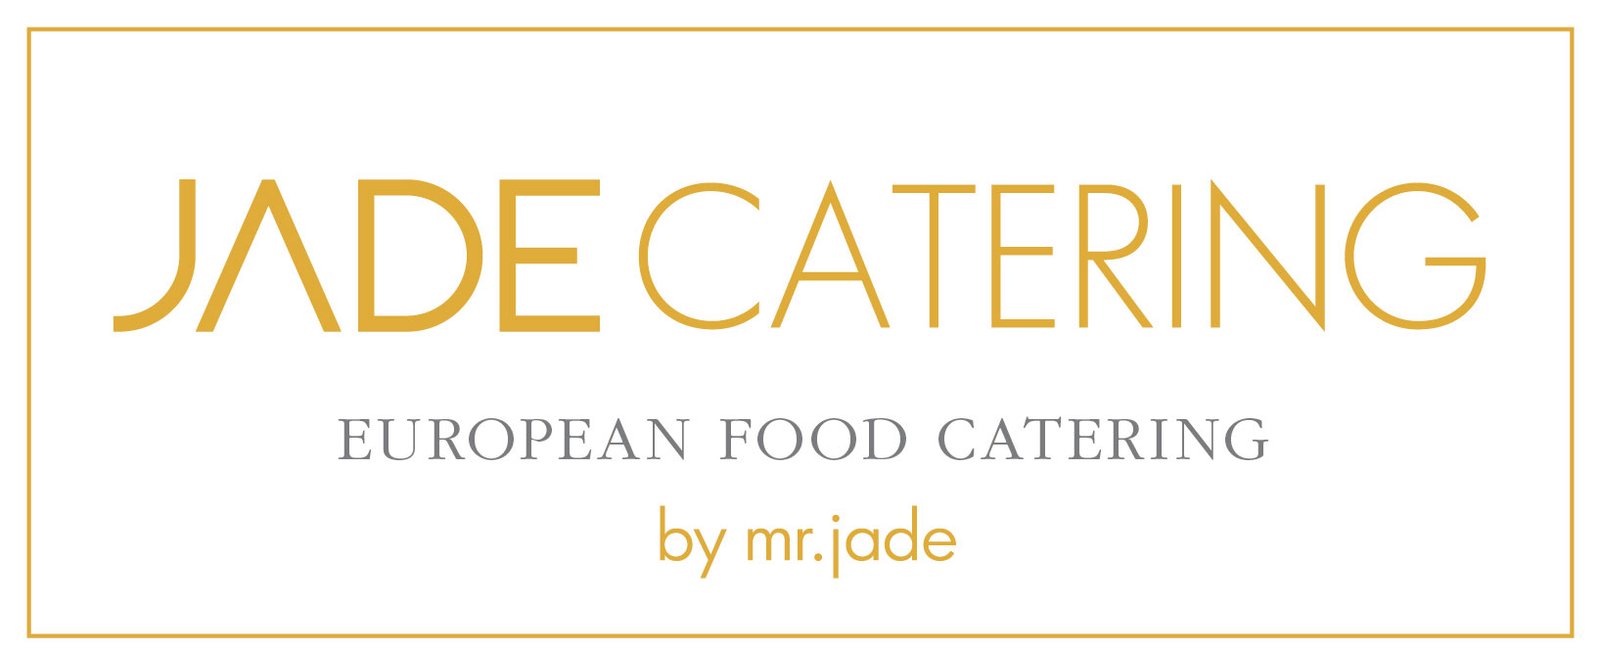 Jade Catering European Food